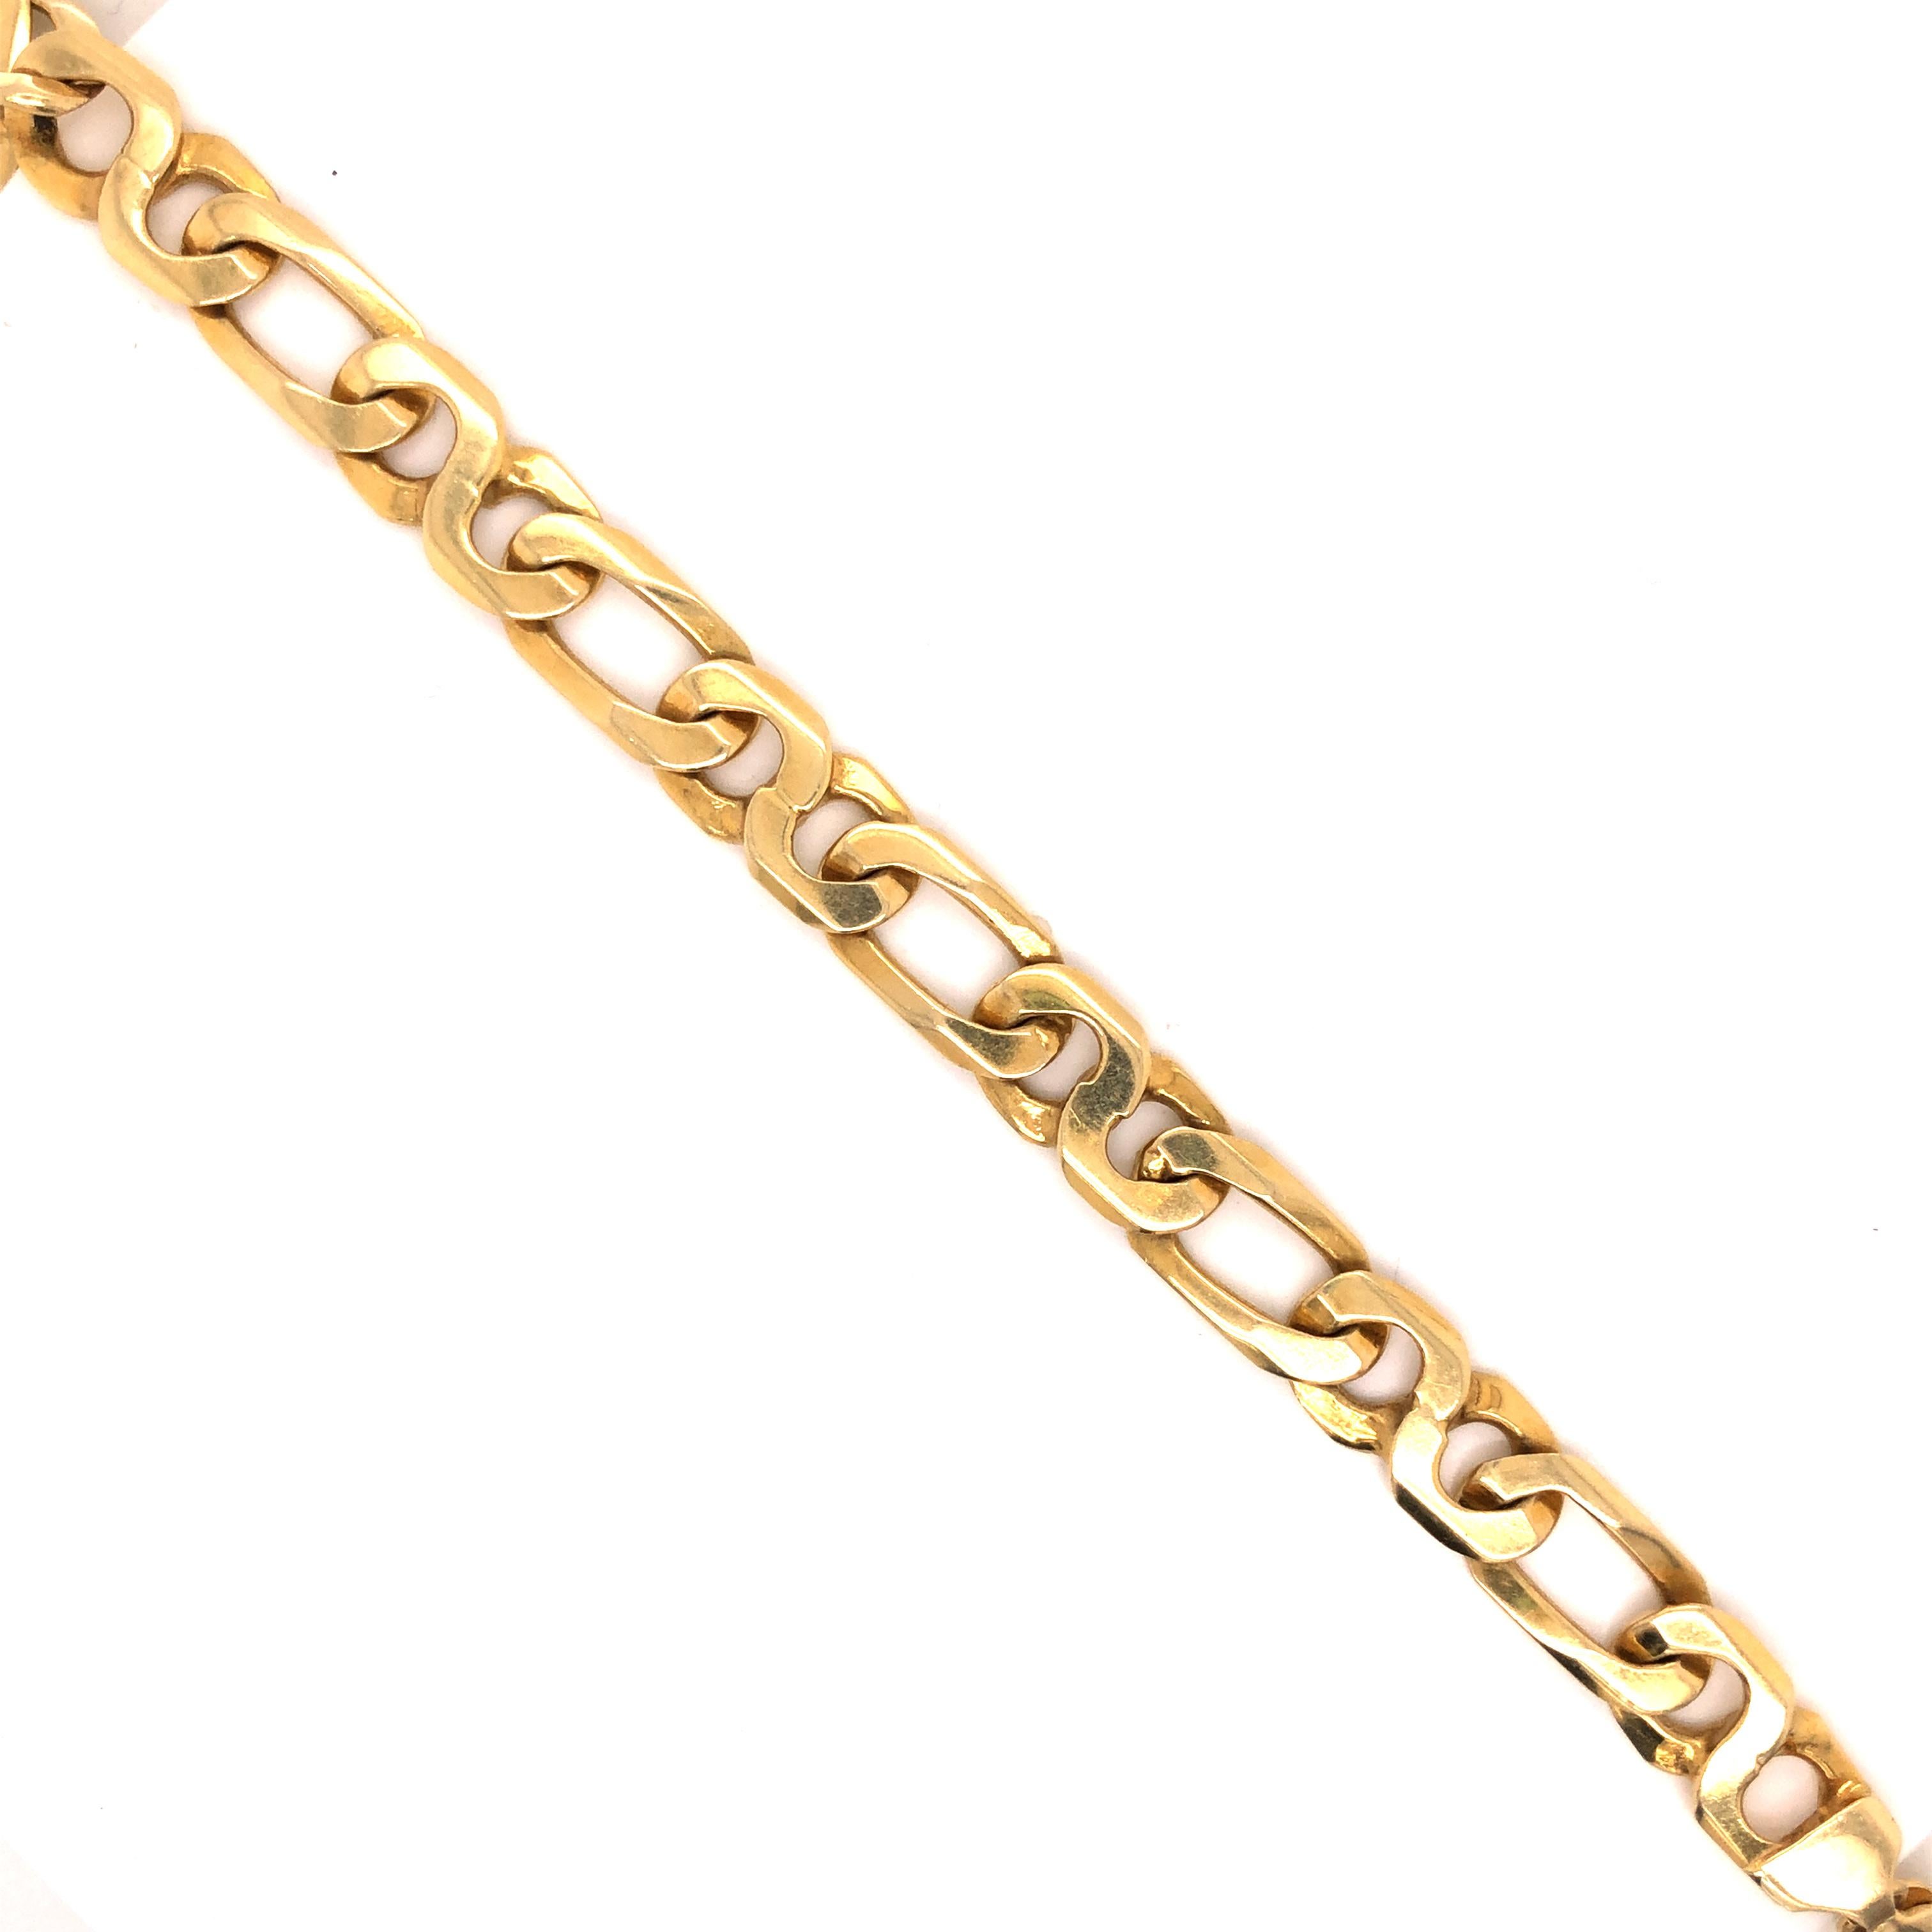 14K Gold Link Bracelet

Metal: 14K Yellow Gold

Size: 7 1/2